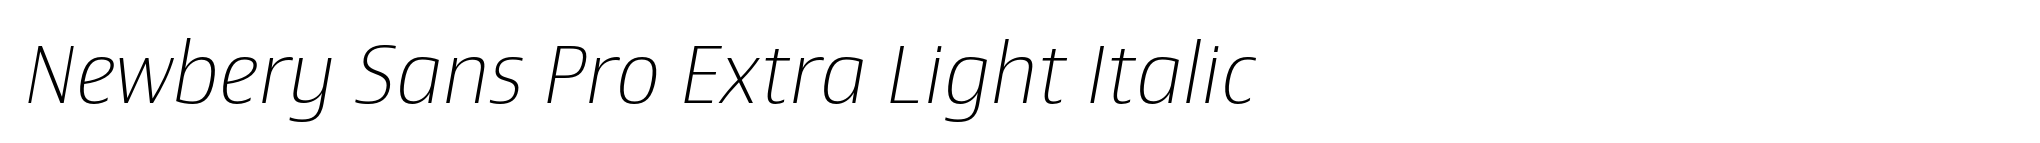 Newbery Sans Pro Extra Light Italic image